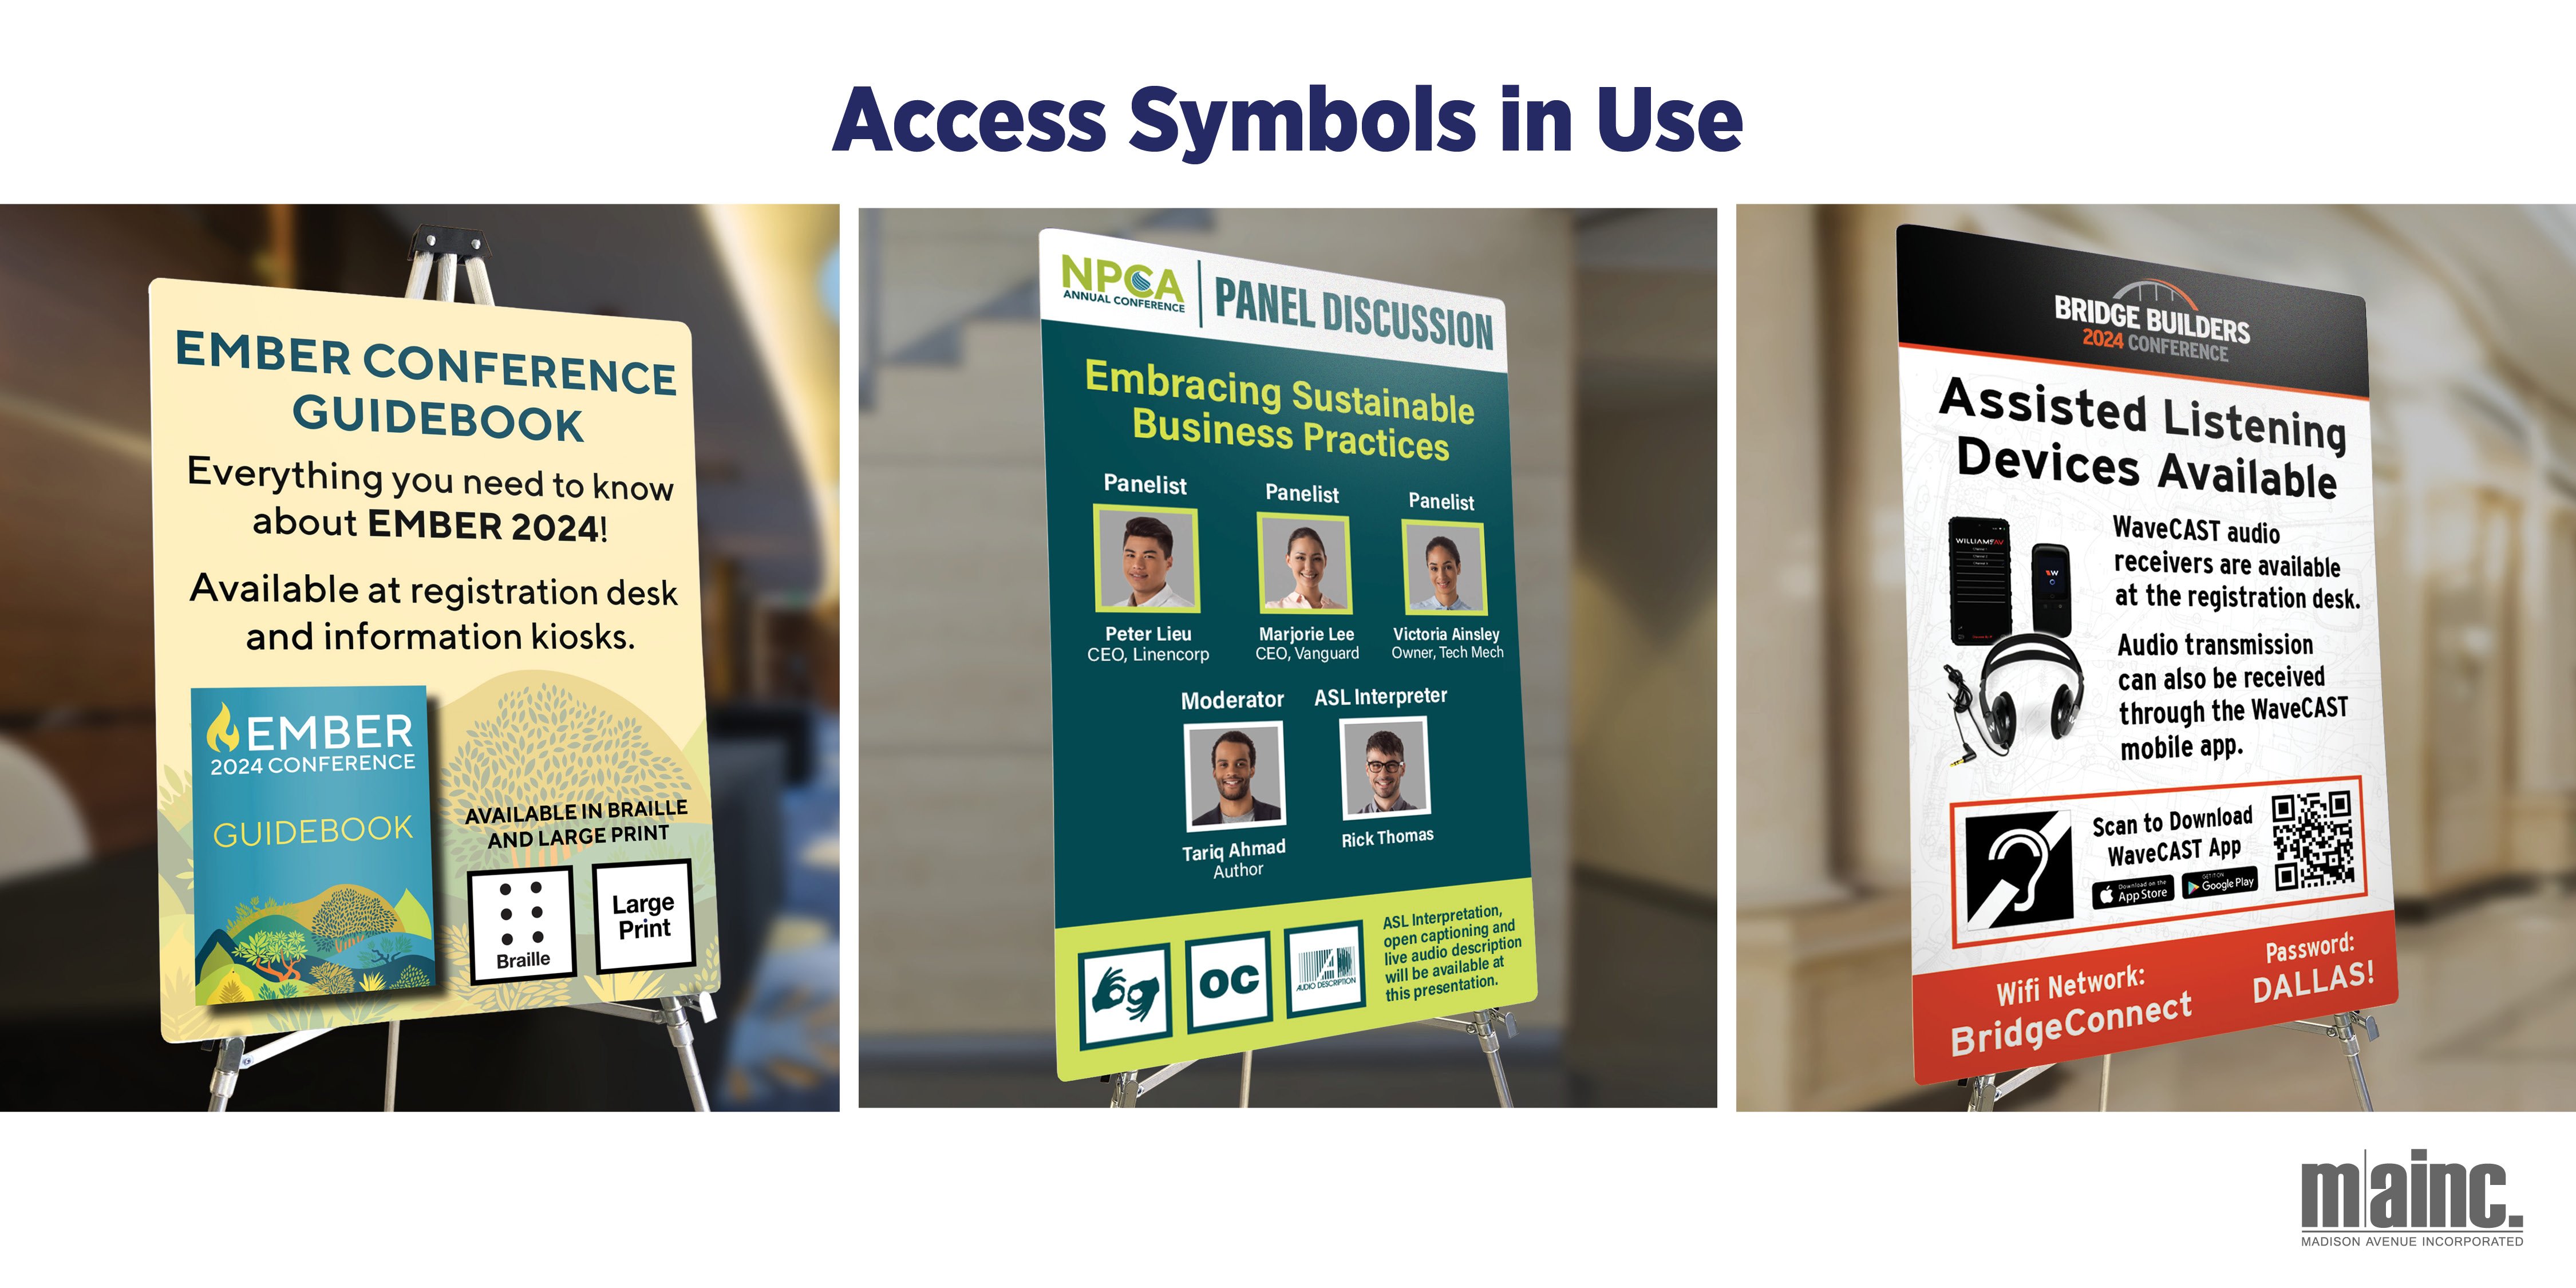 Access Symbols in Use